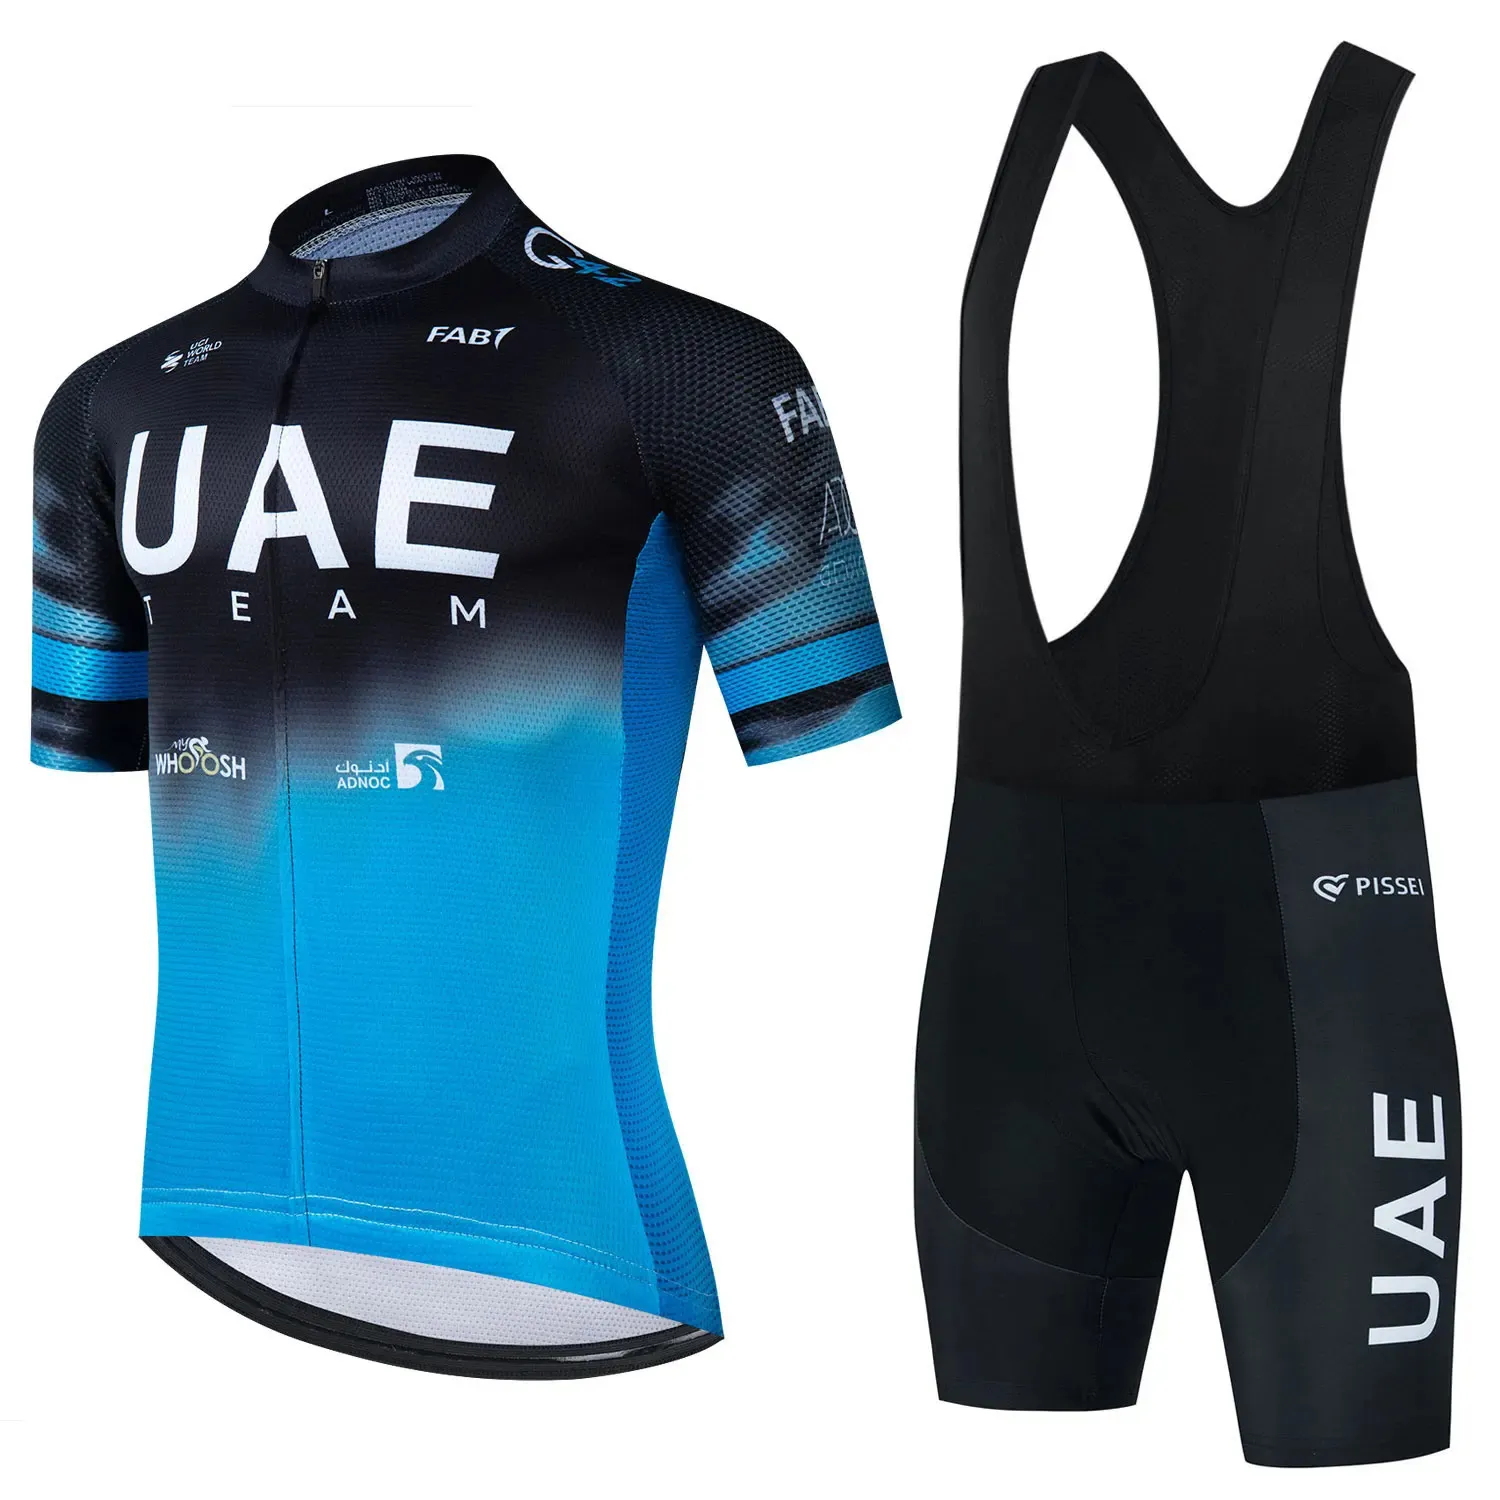 UAE BICYCLES JERSEY SETTER MENS SOMMER CYKLING KLÄNNING MOPTION BIKE BIB SHORTS Motocross Triathlon Maillot Shirts Ciclismo 240311